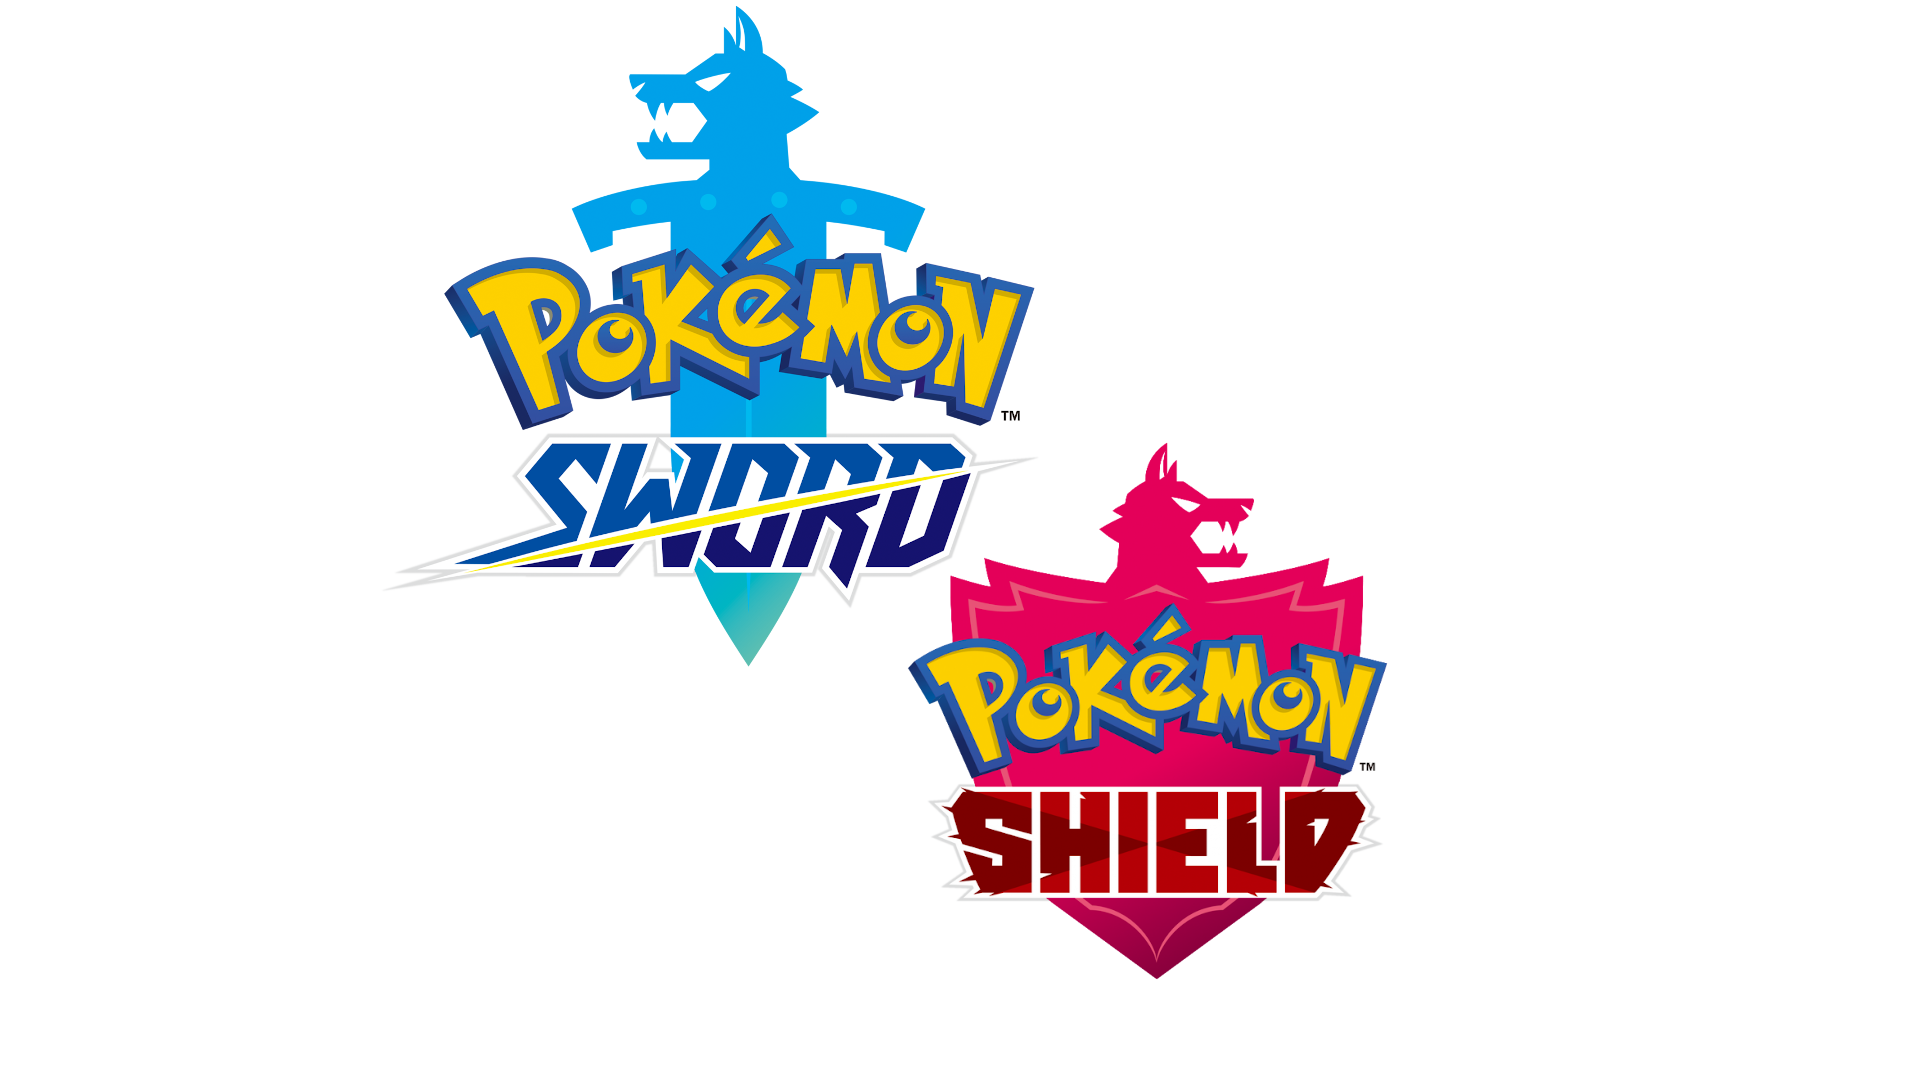 Picture of Pokemon Sword & Shield logos